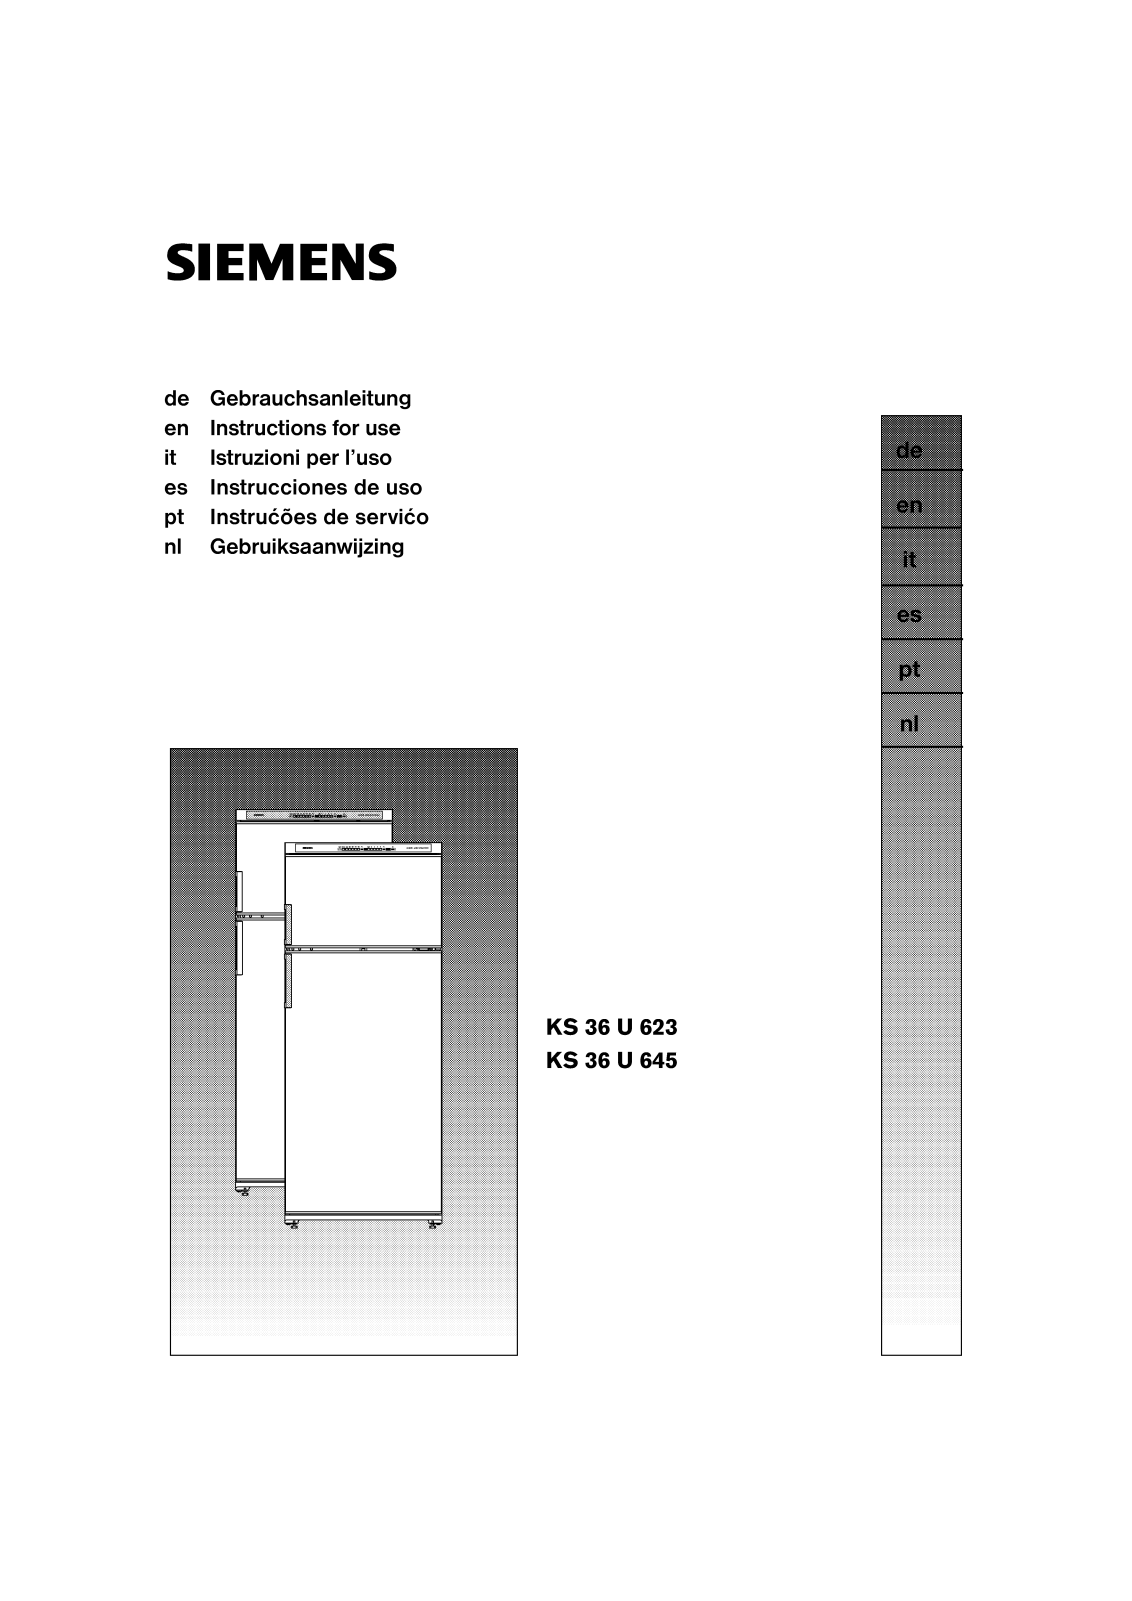 SIEMENS KS36U645 User Manual